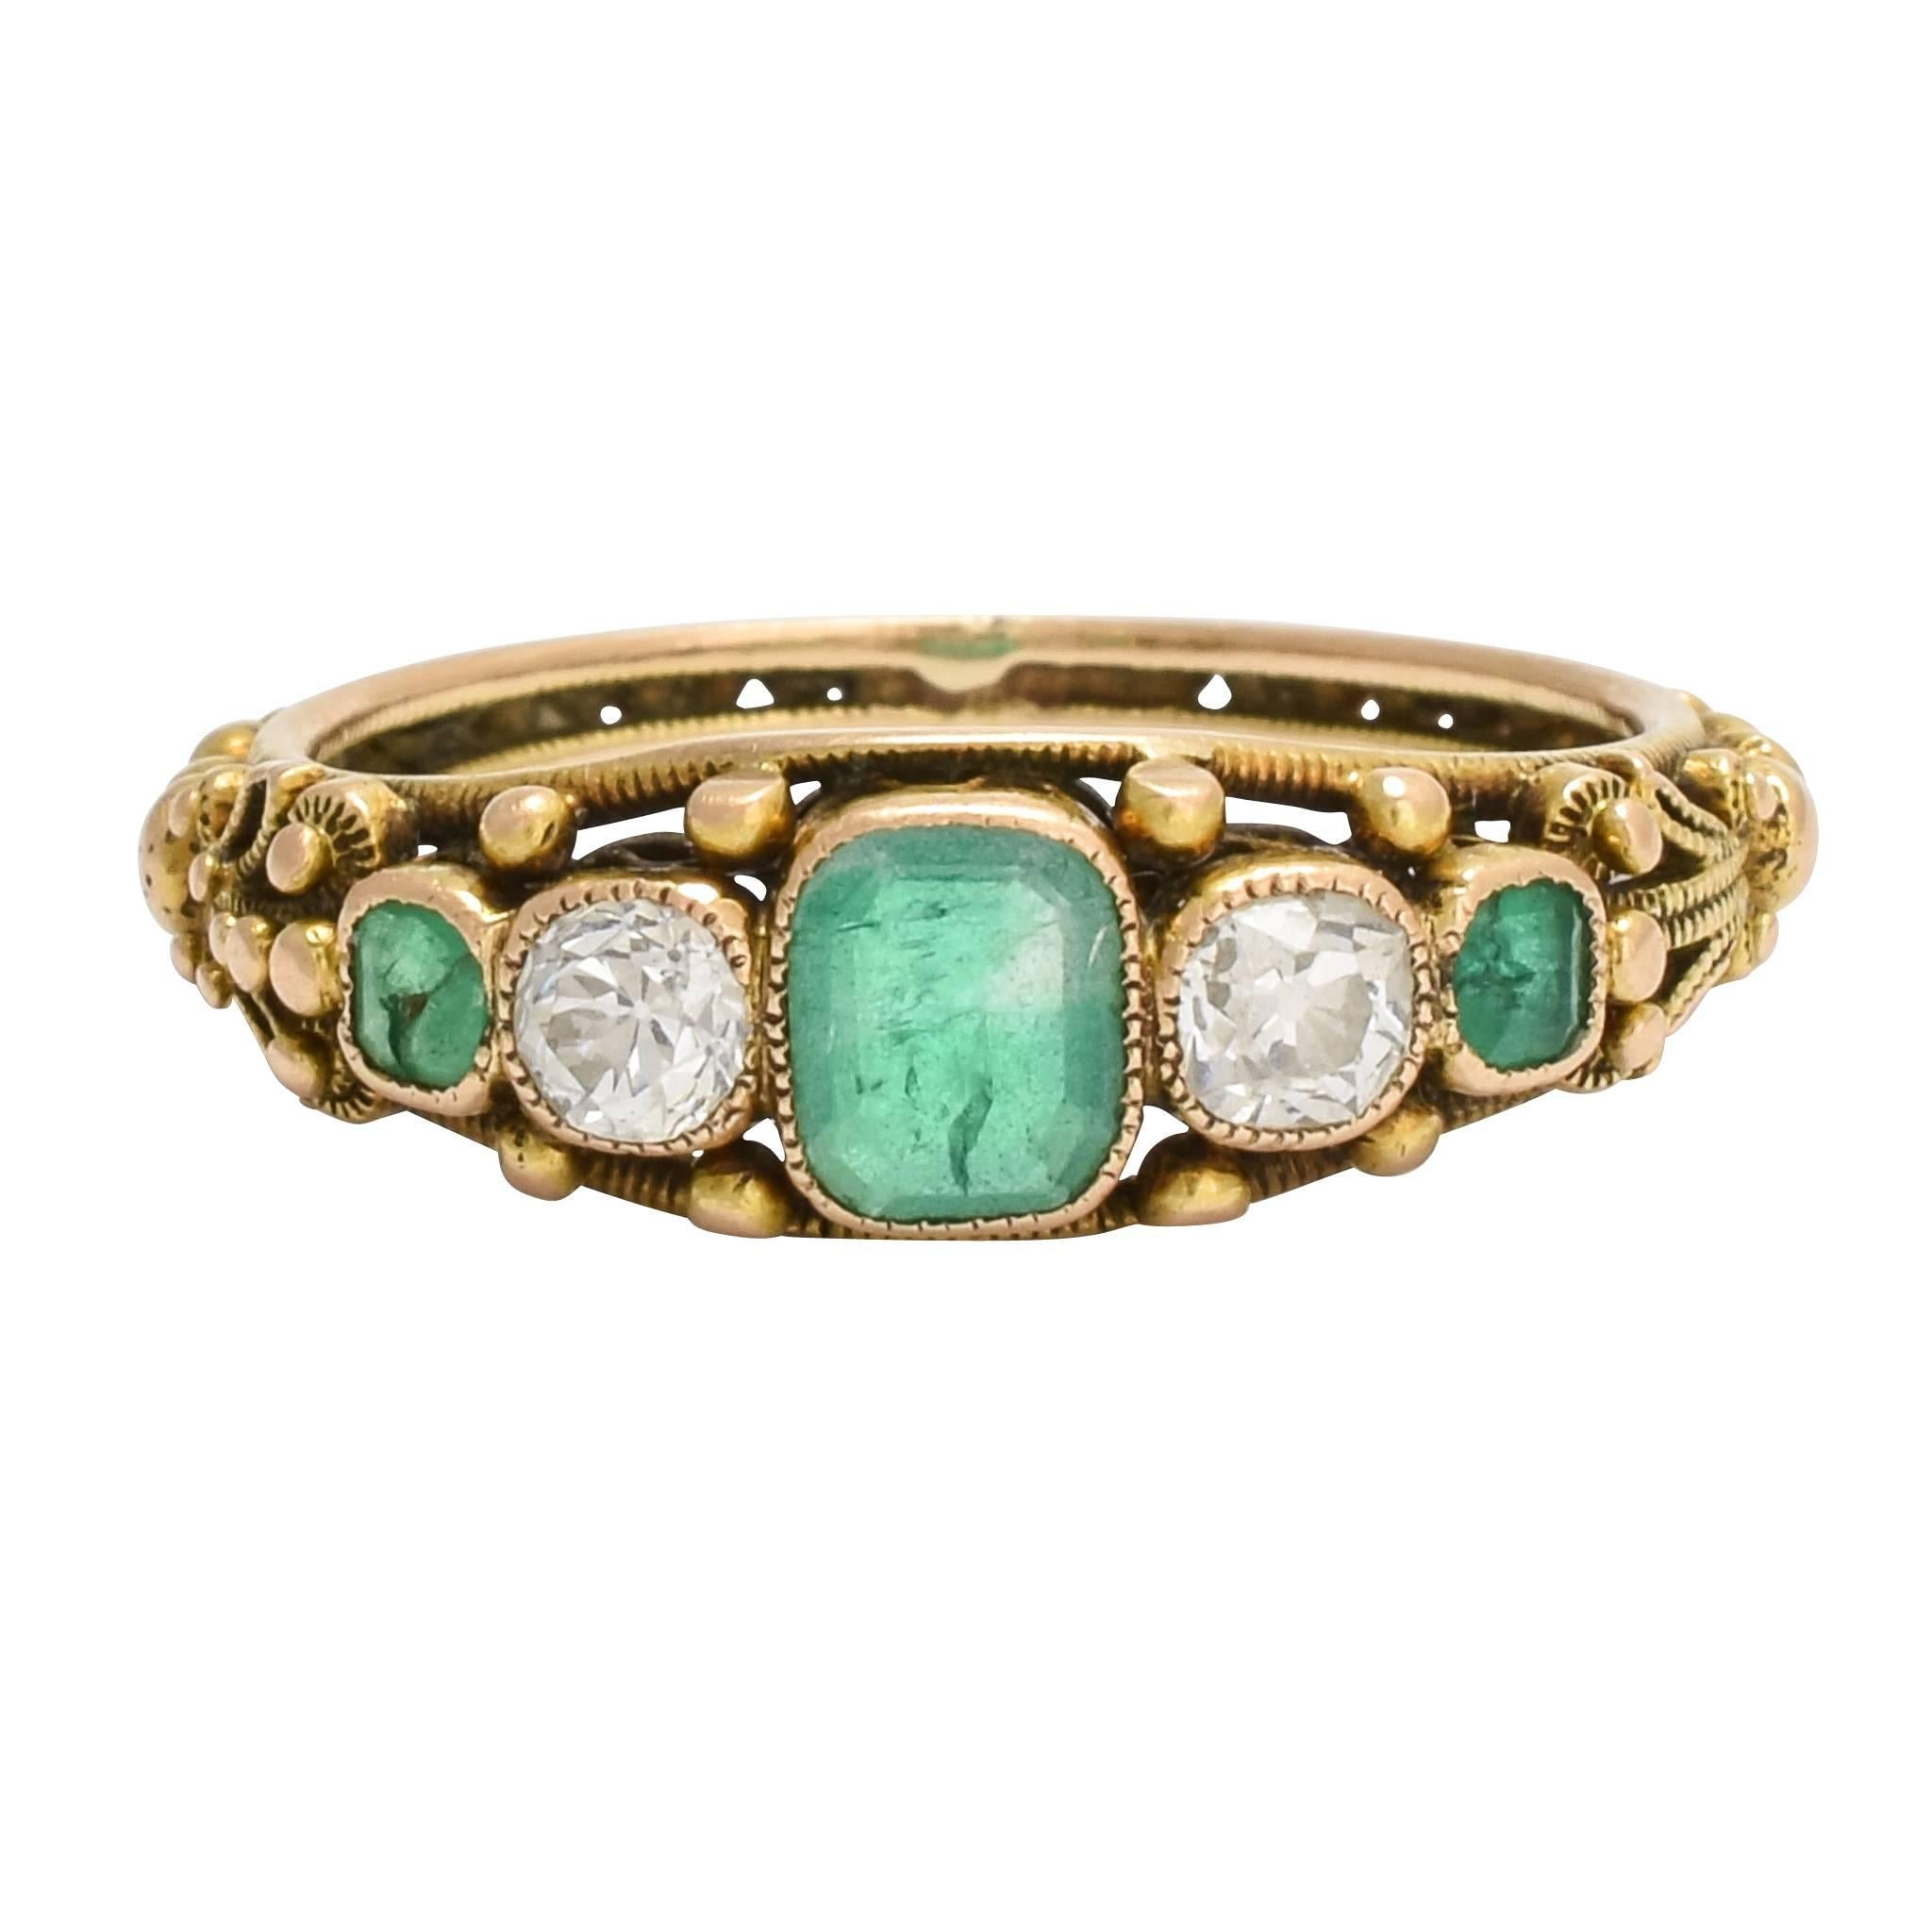 Antique Georgian Regency Period Emerald Diamond Filigree Ring